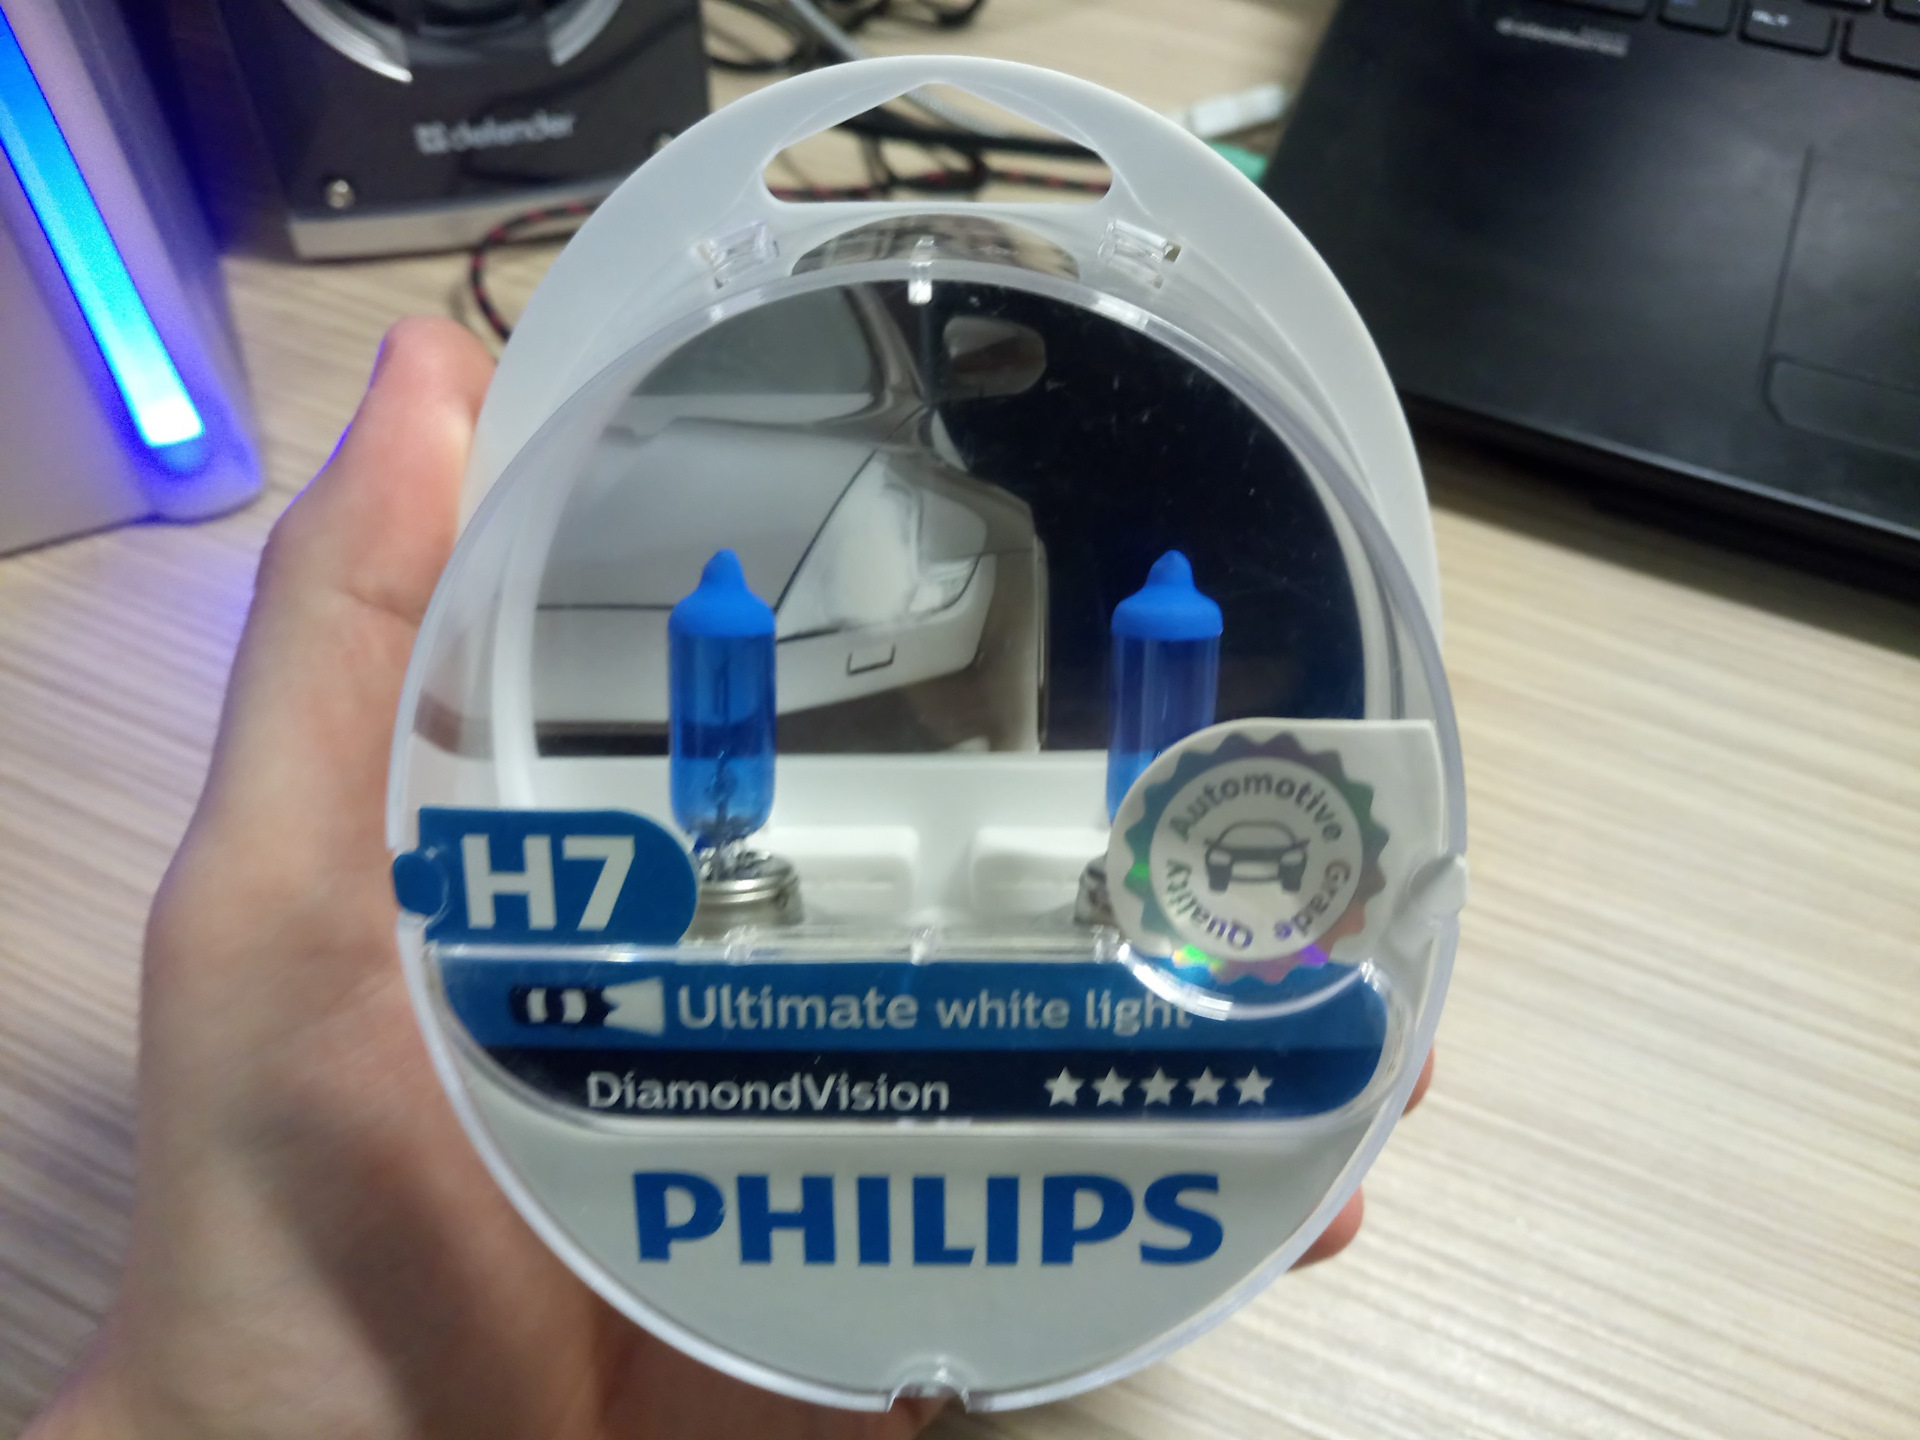 Лампы филипс ближний свет. 12972dvs2. Philips Ultimate White Light h7 Diamond Vision. 12972dv2. Philips 9005dvs2.